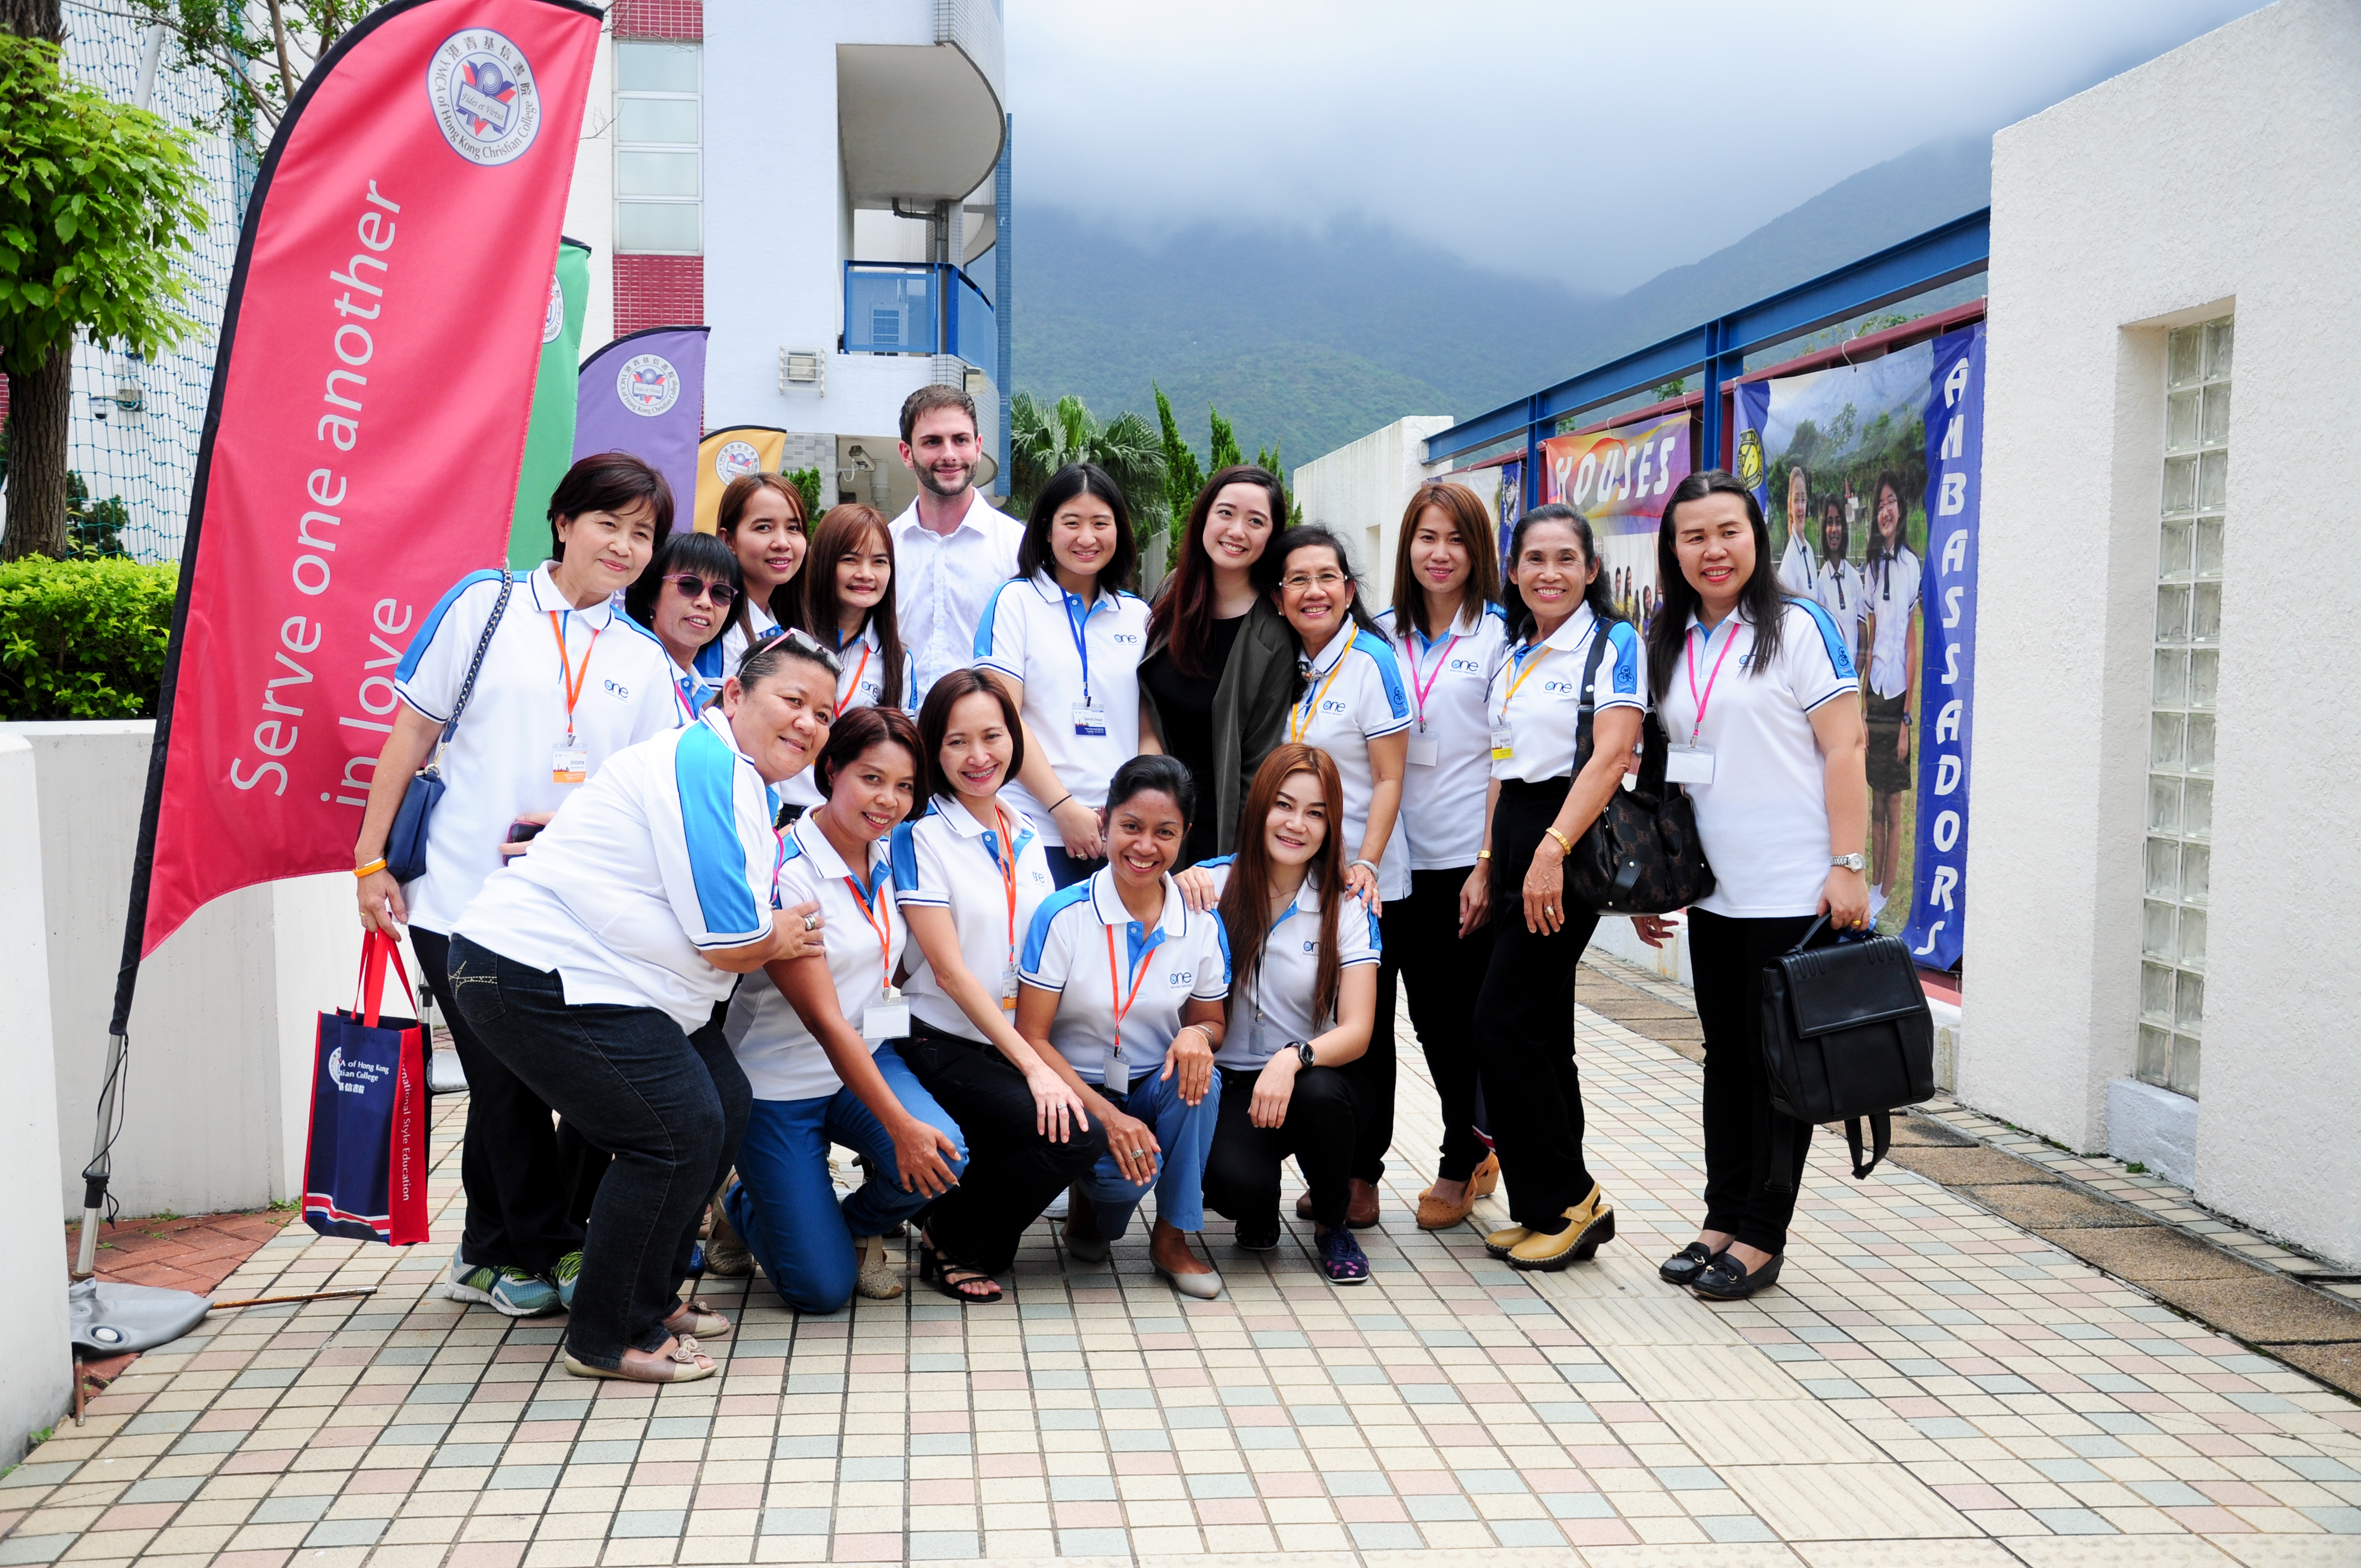 Thai Watana Panich Teachers Education Field Trip” ครั้งที่ 5 ณ YMCA OF HONG KONG CHRISTIAN COLLEGE (YHKCC)